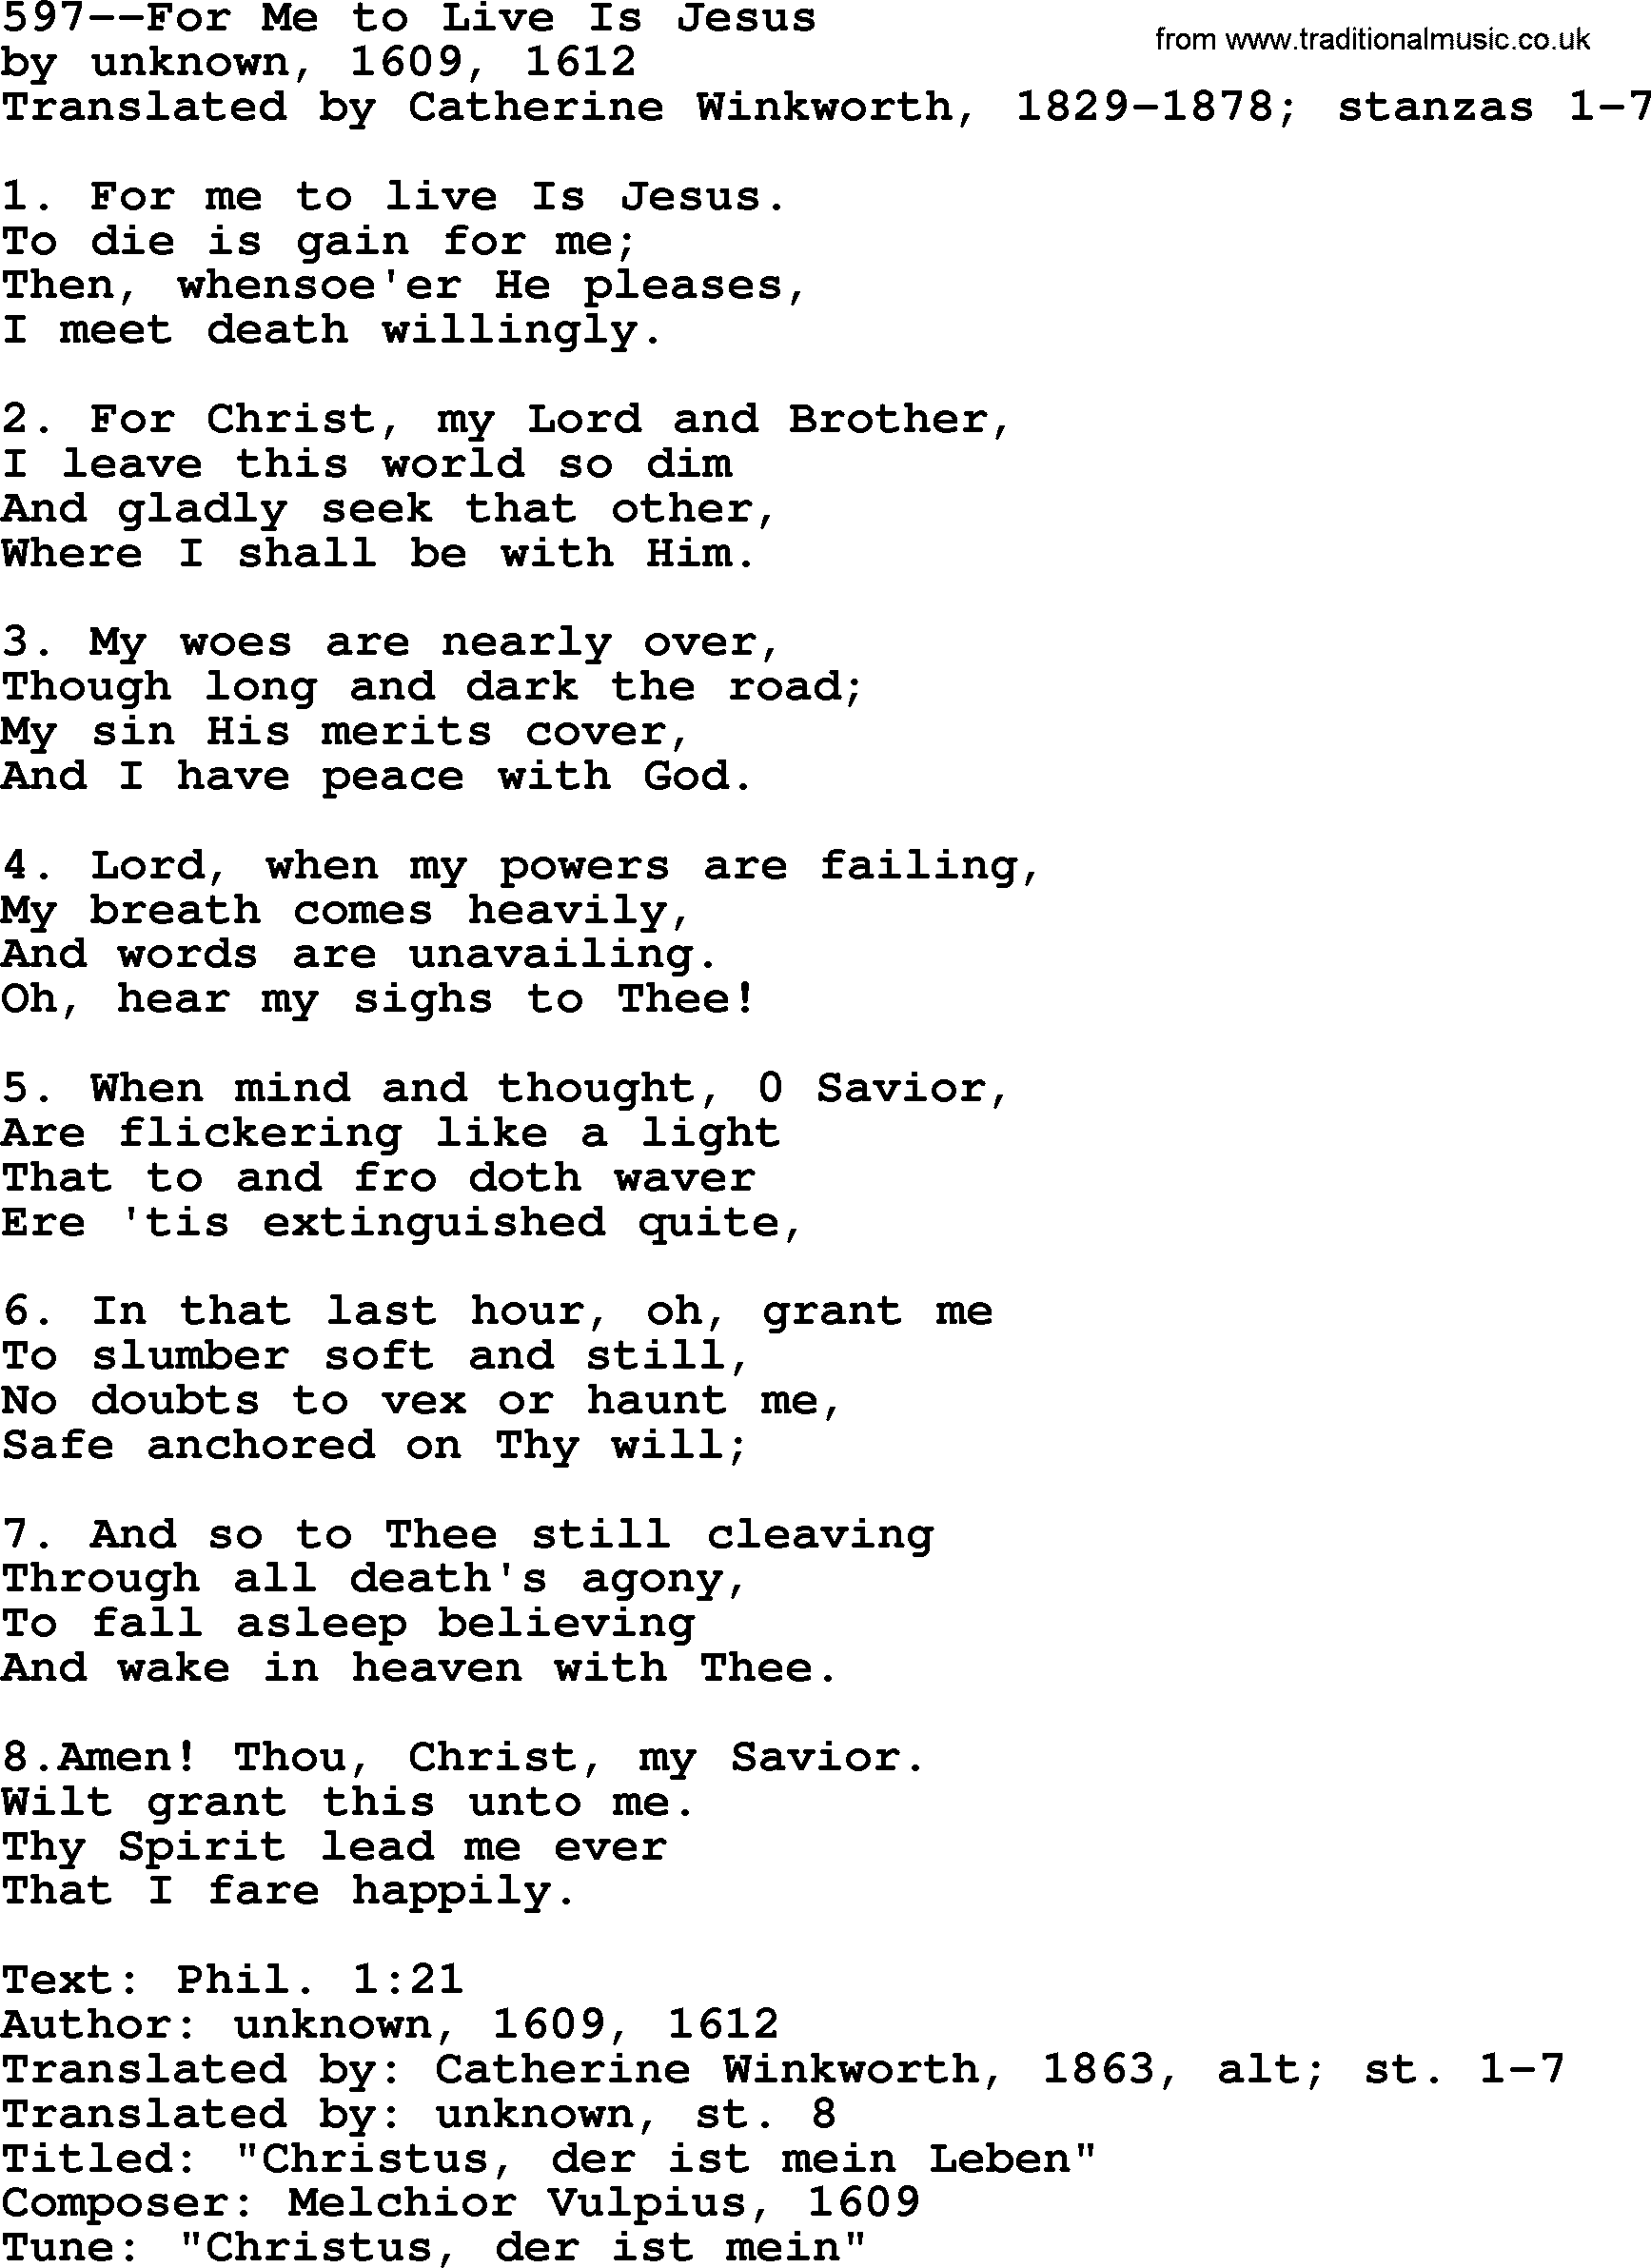 Lutheran Hymn: 597--For Me to Live Is Jesus.txt lyrics with PDF